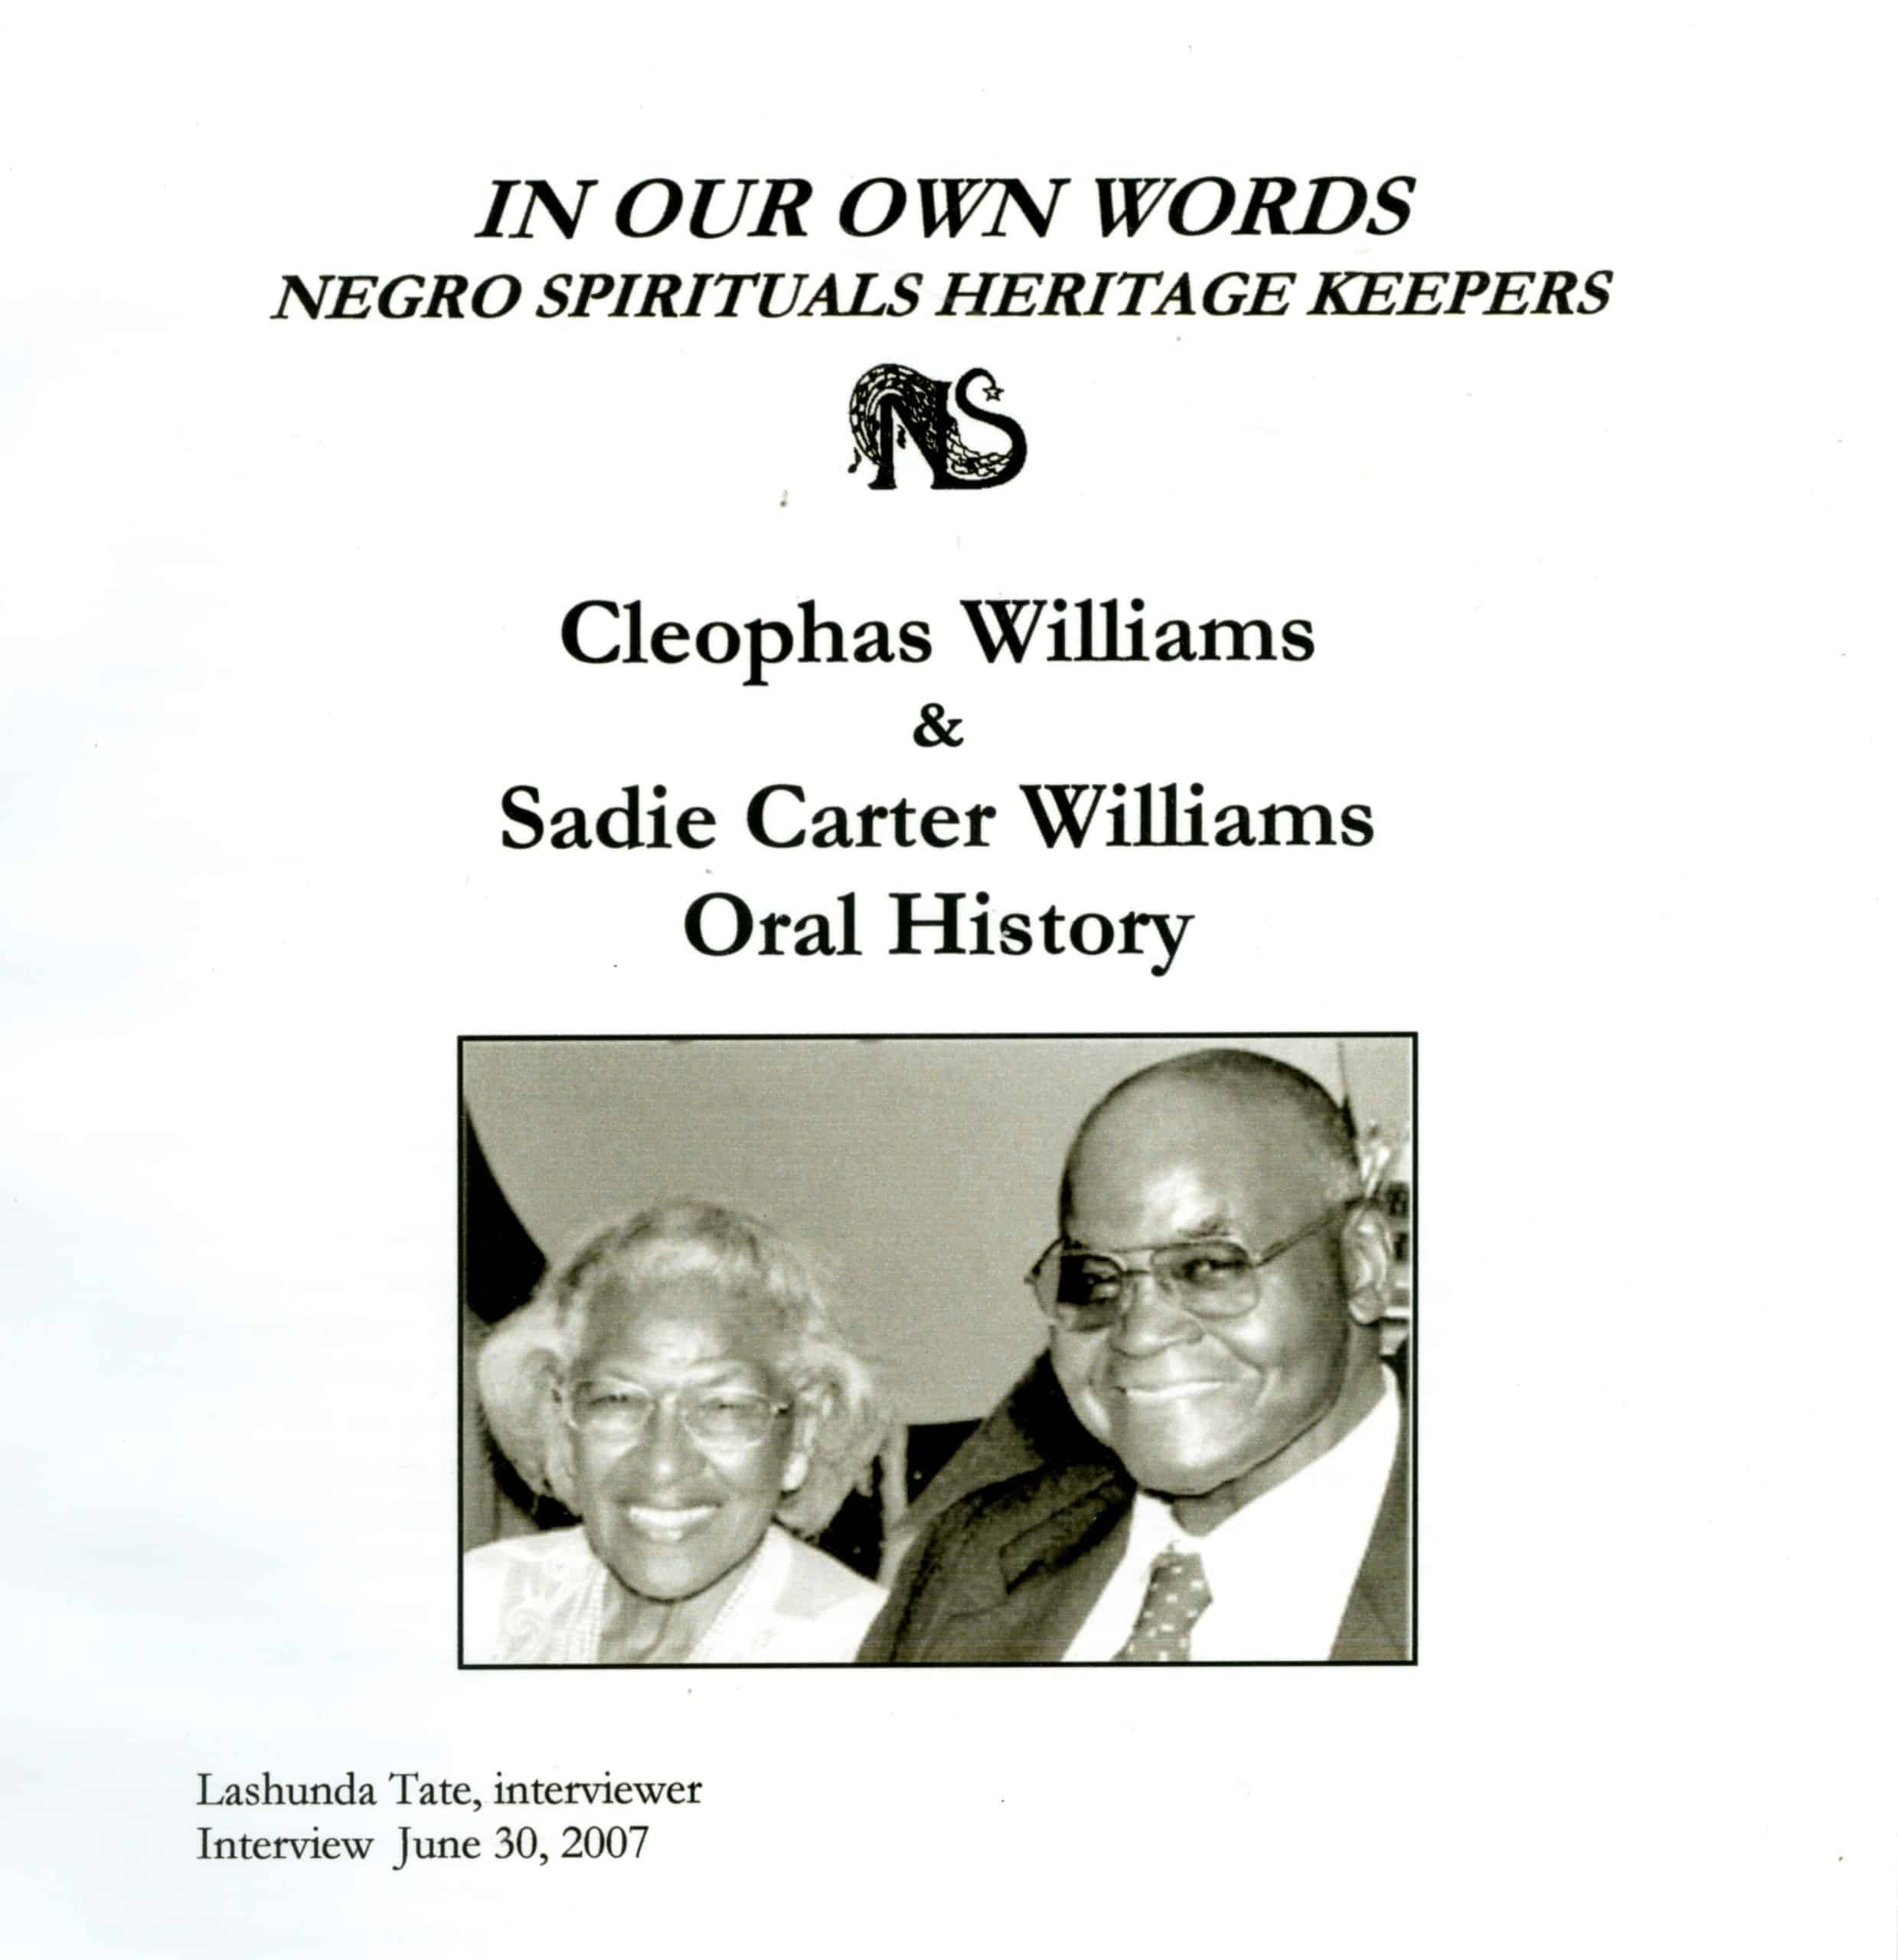 Cleophus Williams and his wife Sadie Williams